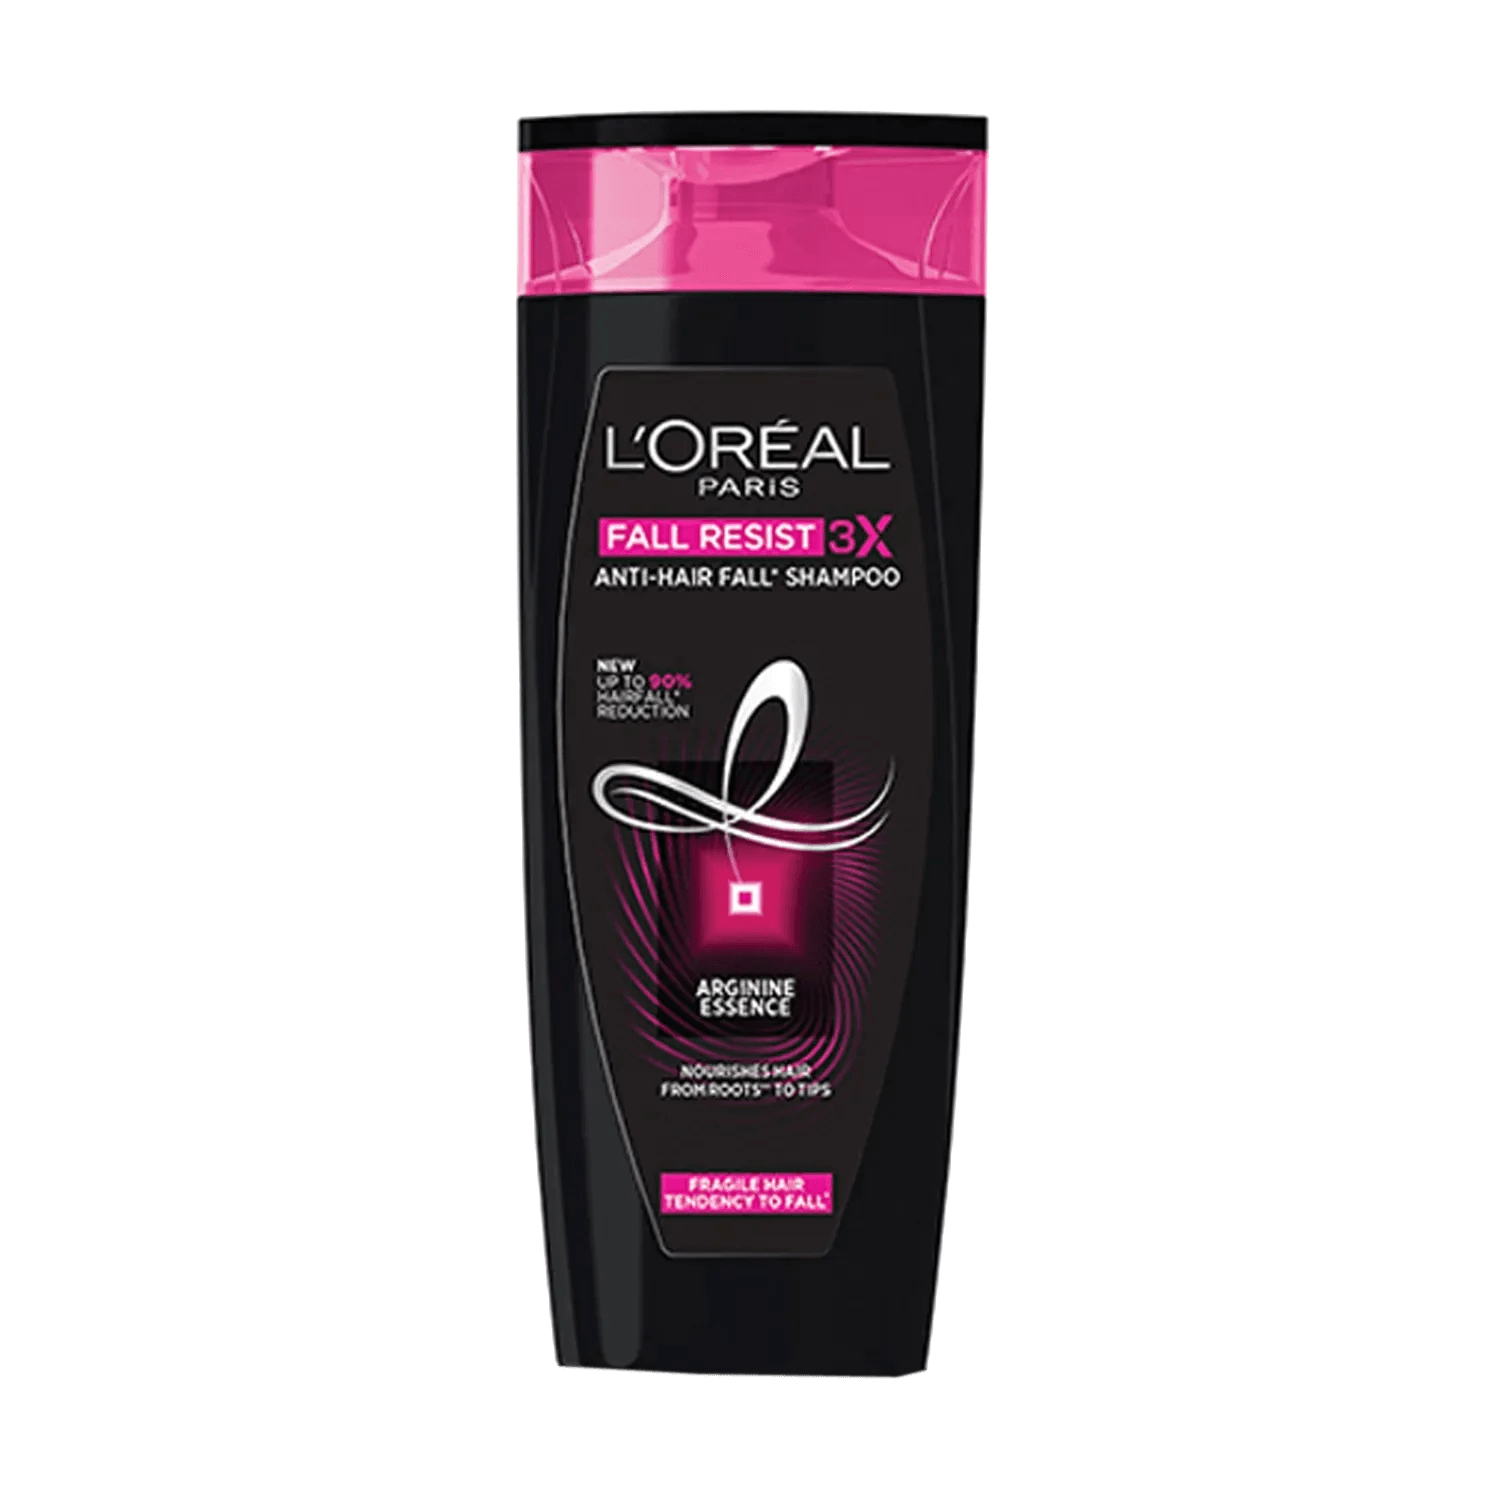 L'Oreal Paris | L'Oreal Paris Fall Resist 3X Anti-Hairfall  Shampoo,  82.5ml